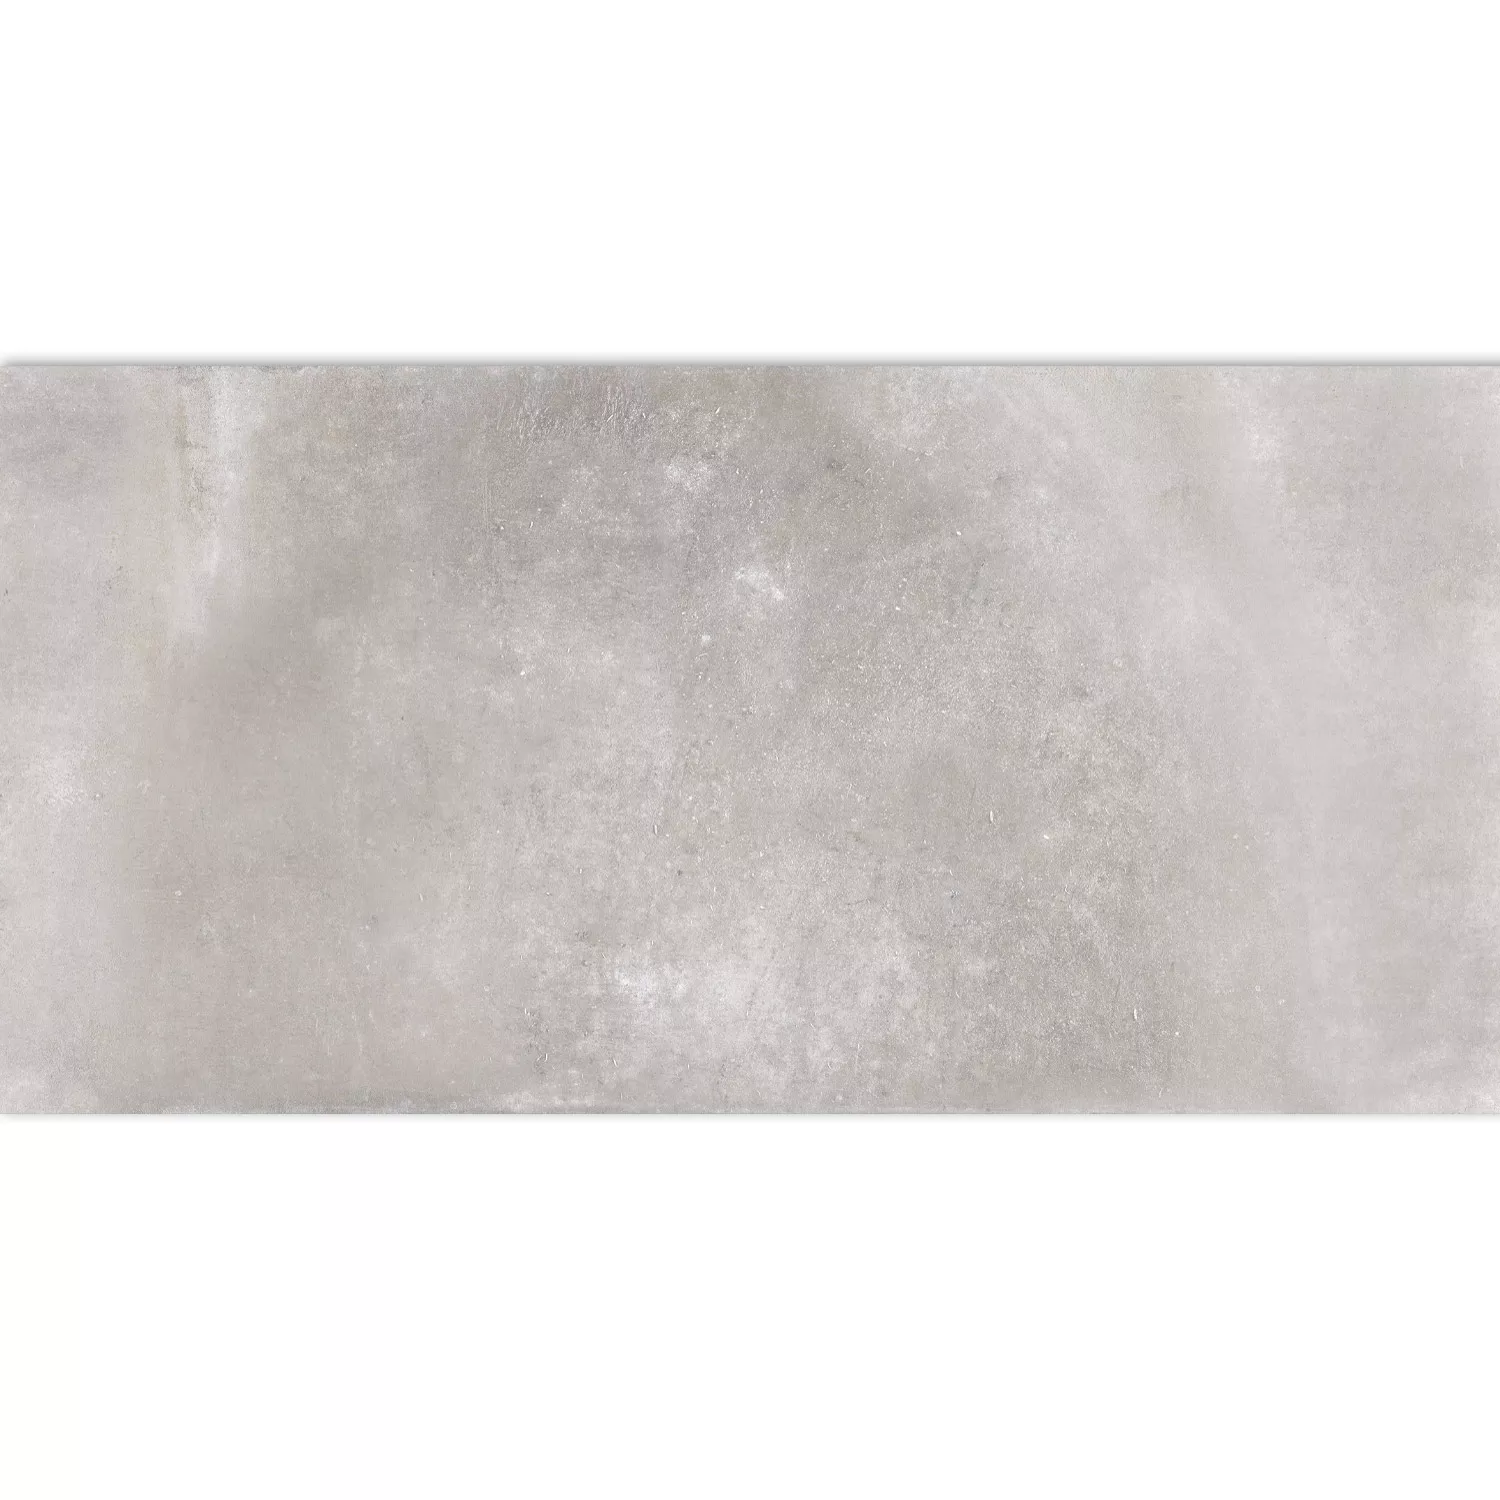 Vzorek Podlahová Dlaždice Cementový Vzhled Maryland Šedá 30x60cm